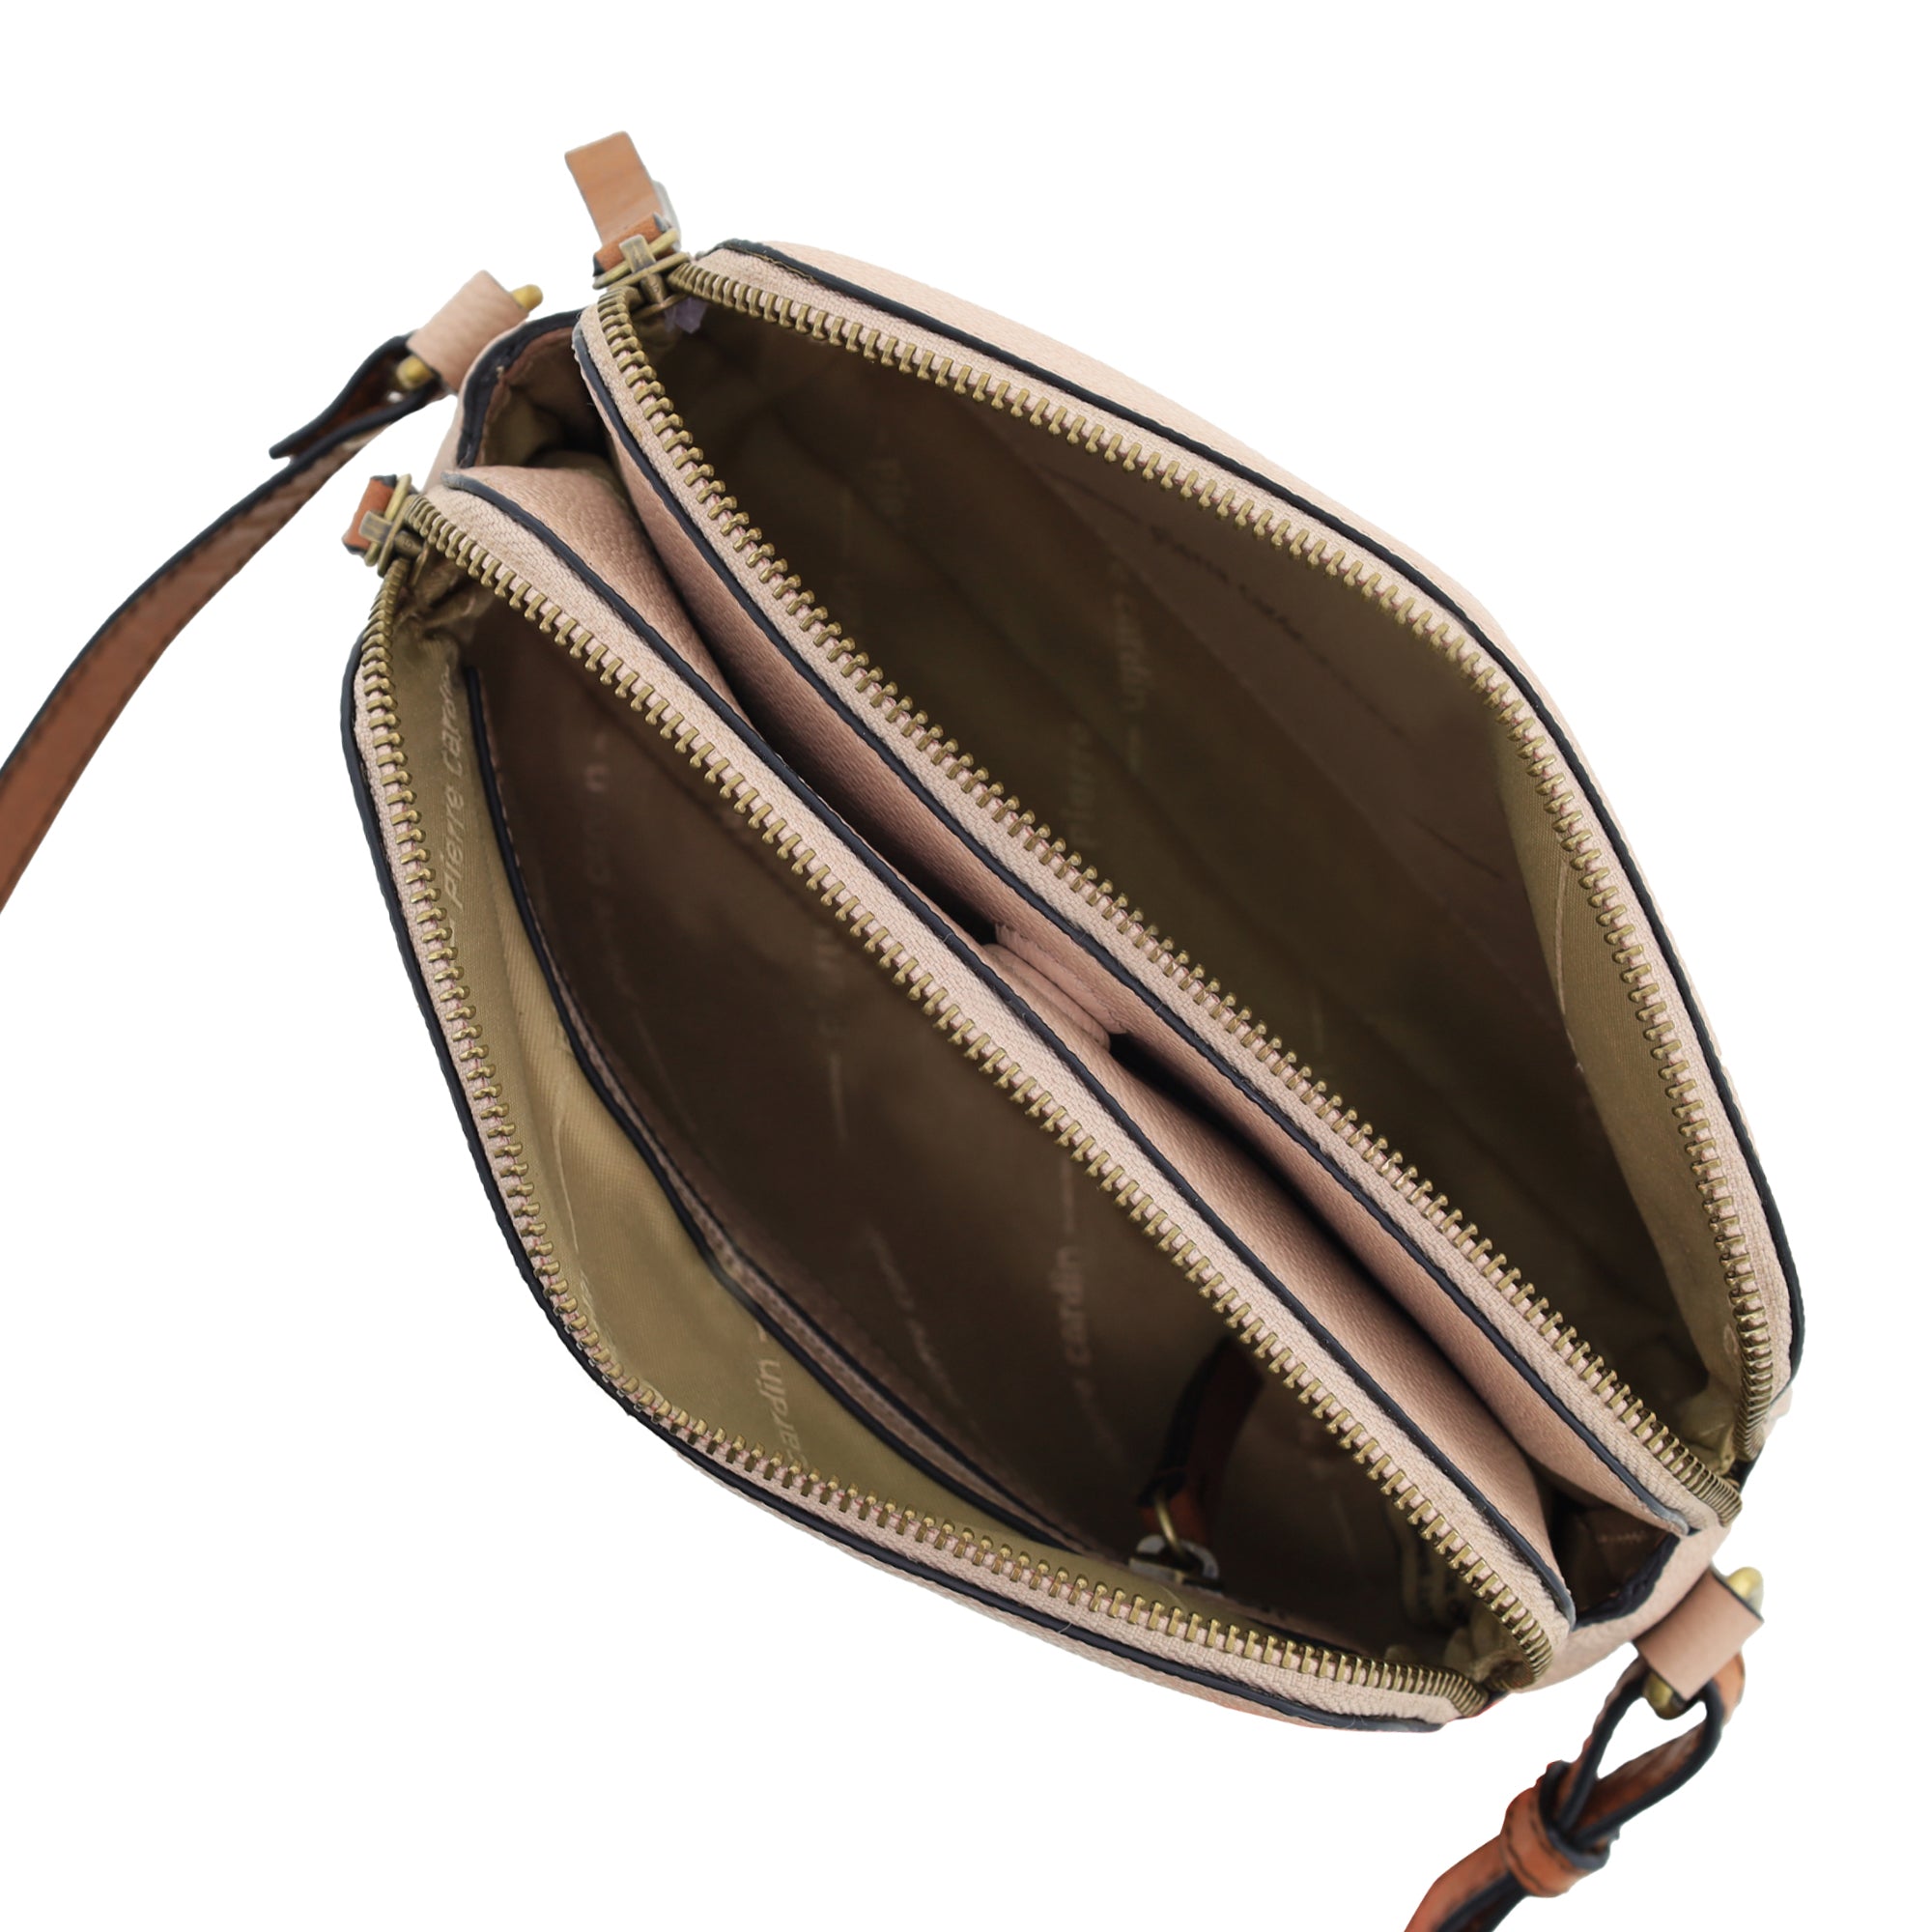 Pierre Cardin Leather Classic Crossbody Bag in Nude